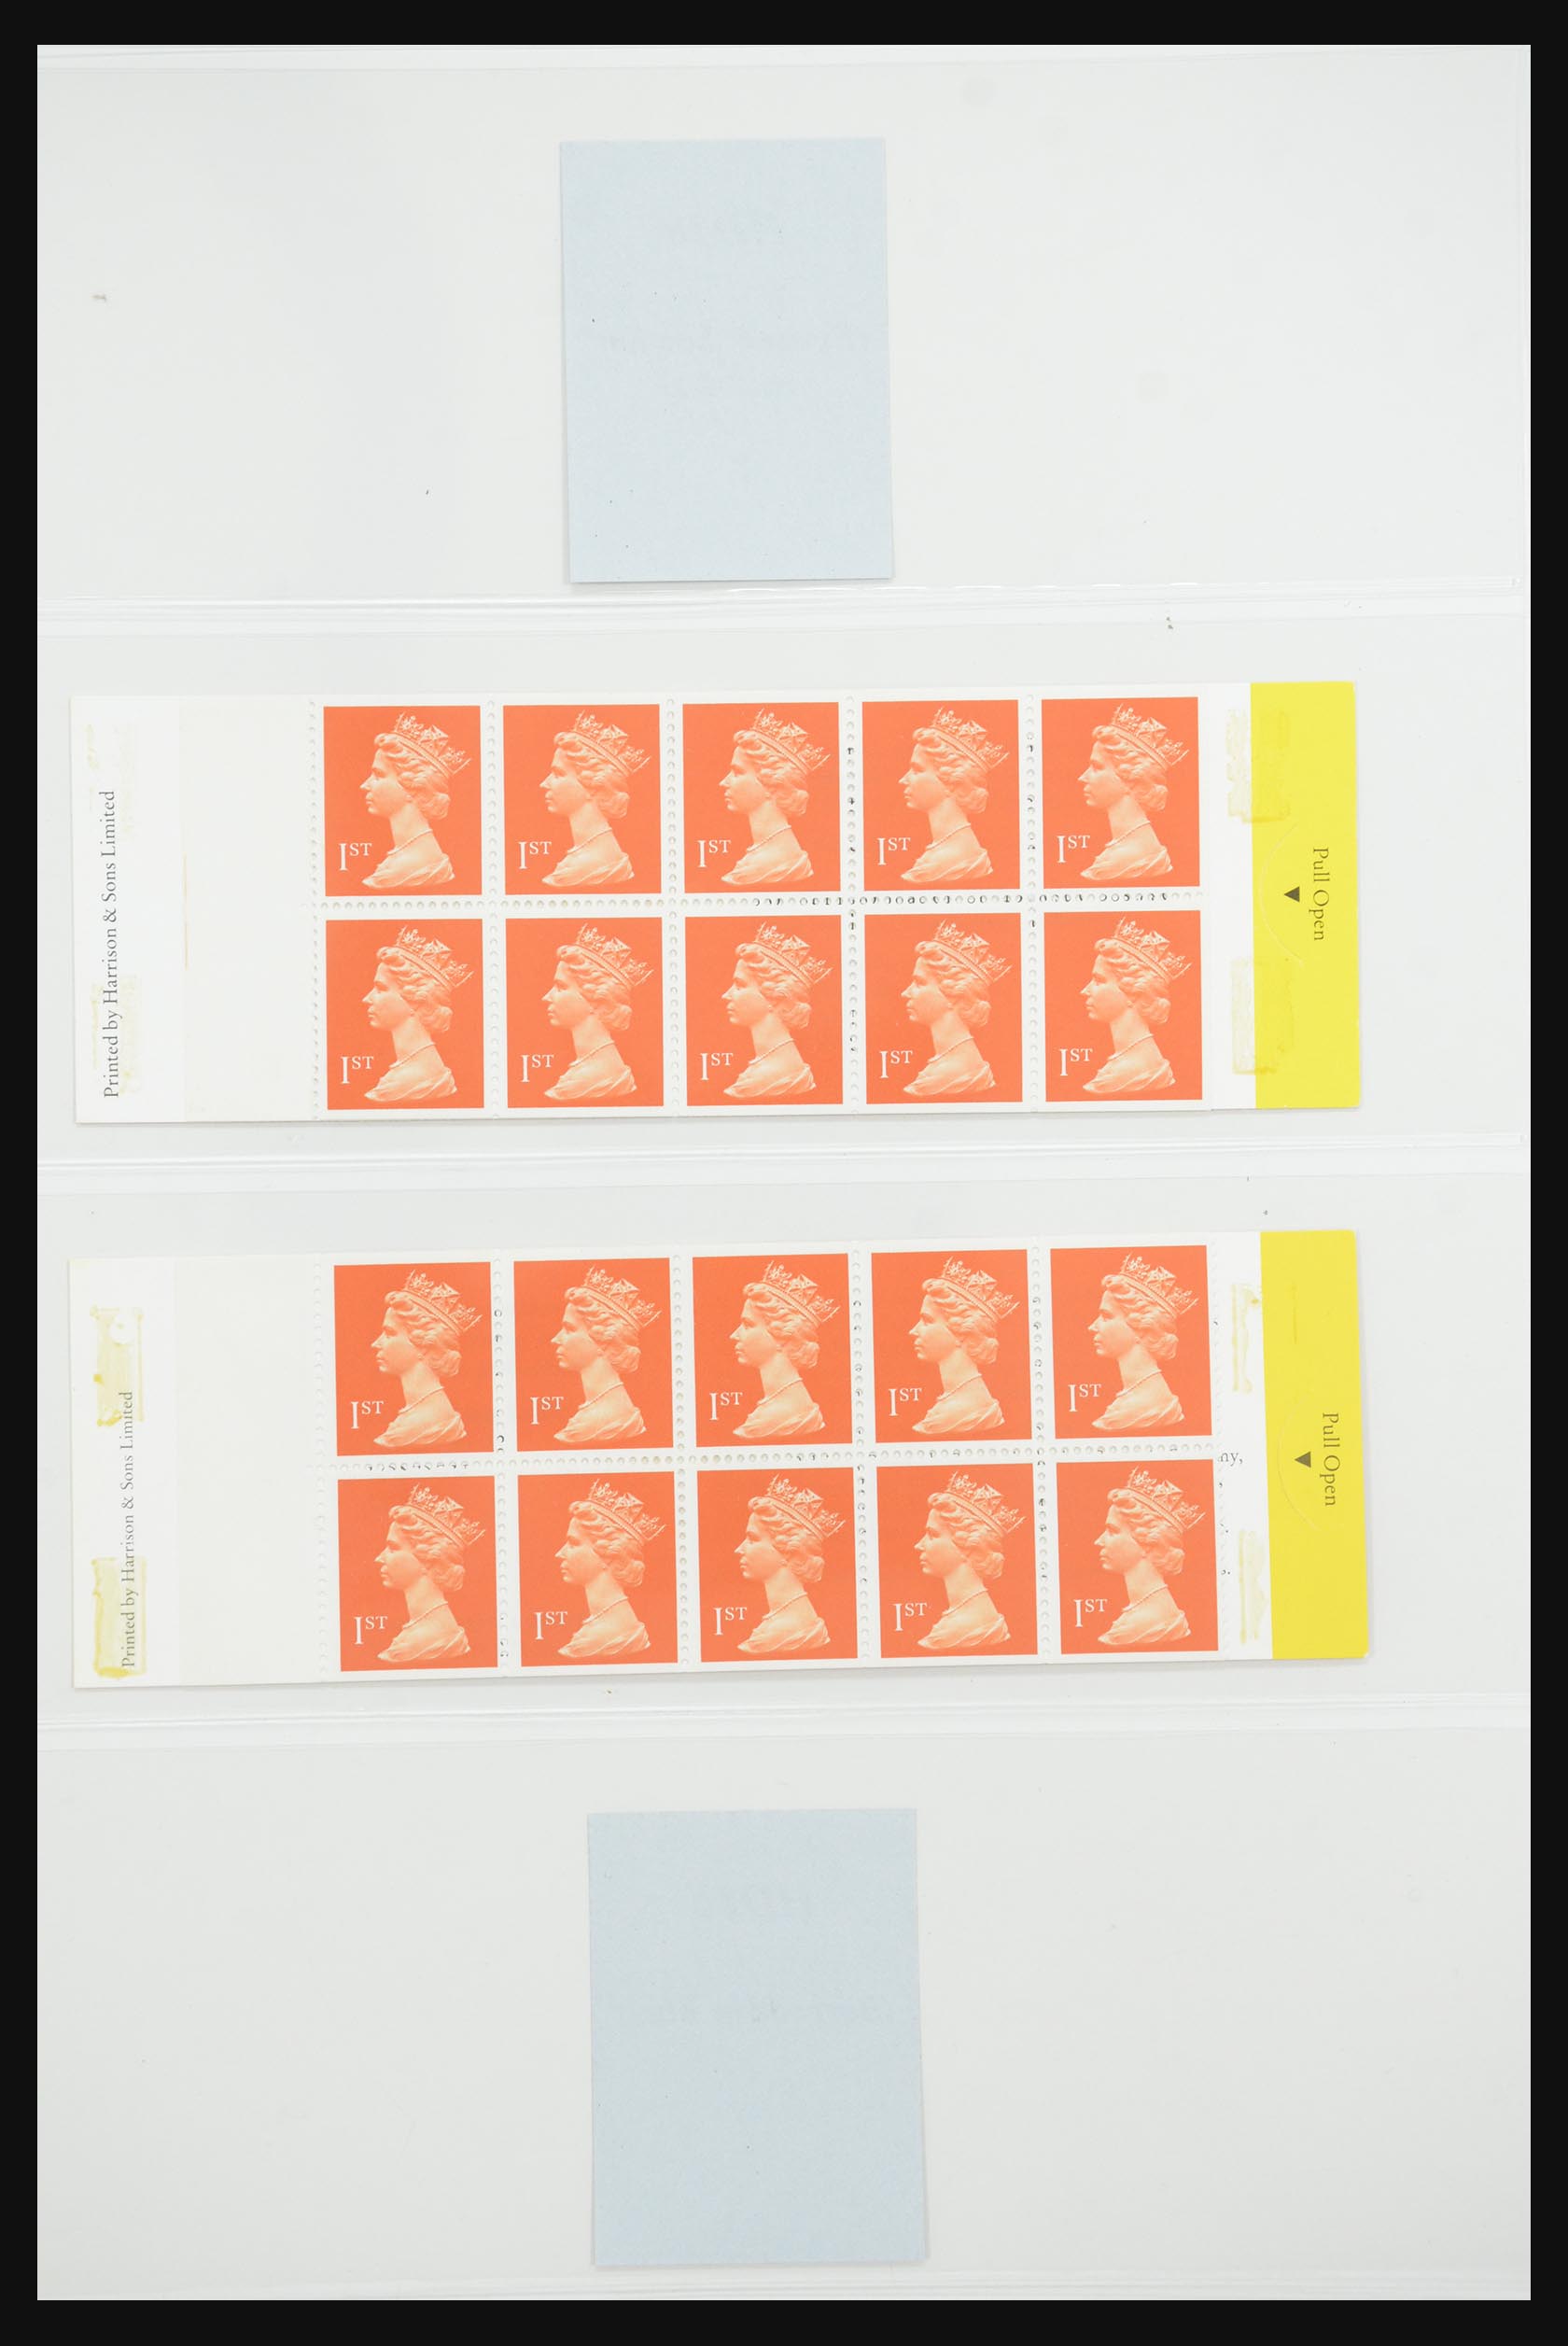 31960 098 - 31960 Great Britain stampbooklets 1989-2000.